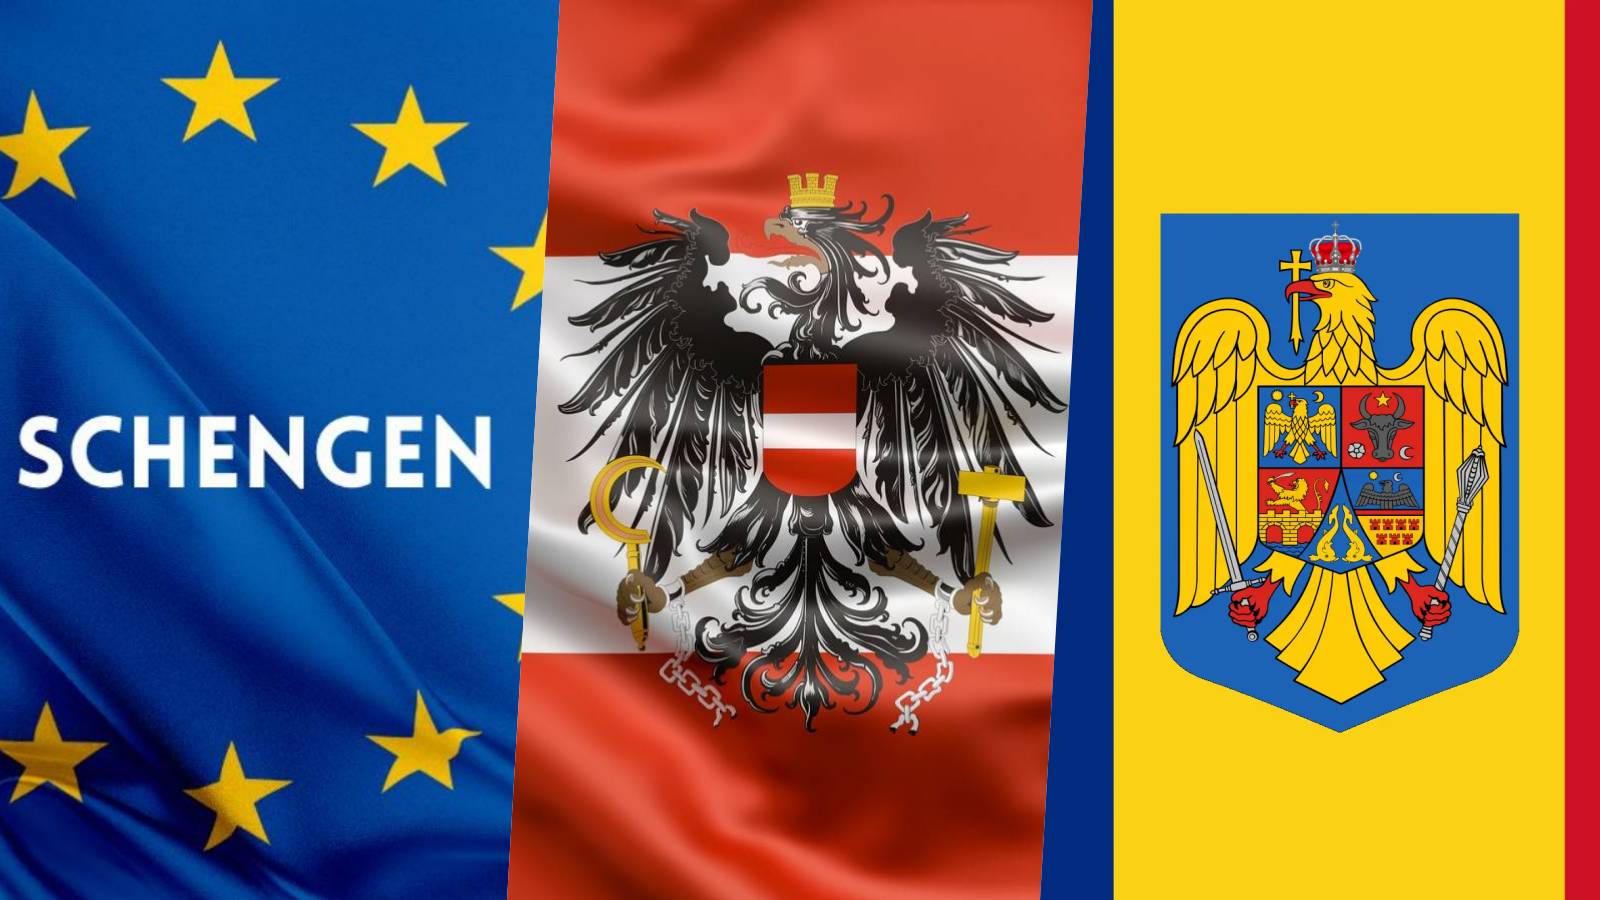 Austria Karl Nehammer Keeps Romania Margine Official LAST HOUR announcement regarding Romania's Schengen Accession